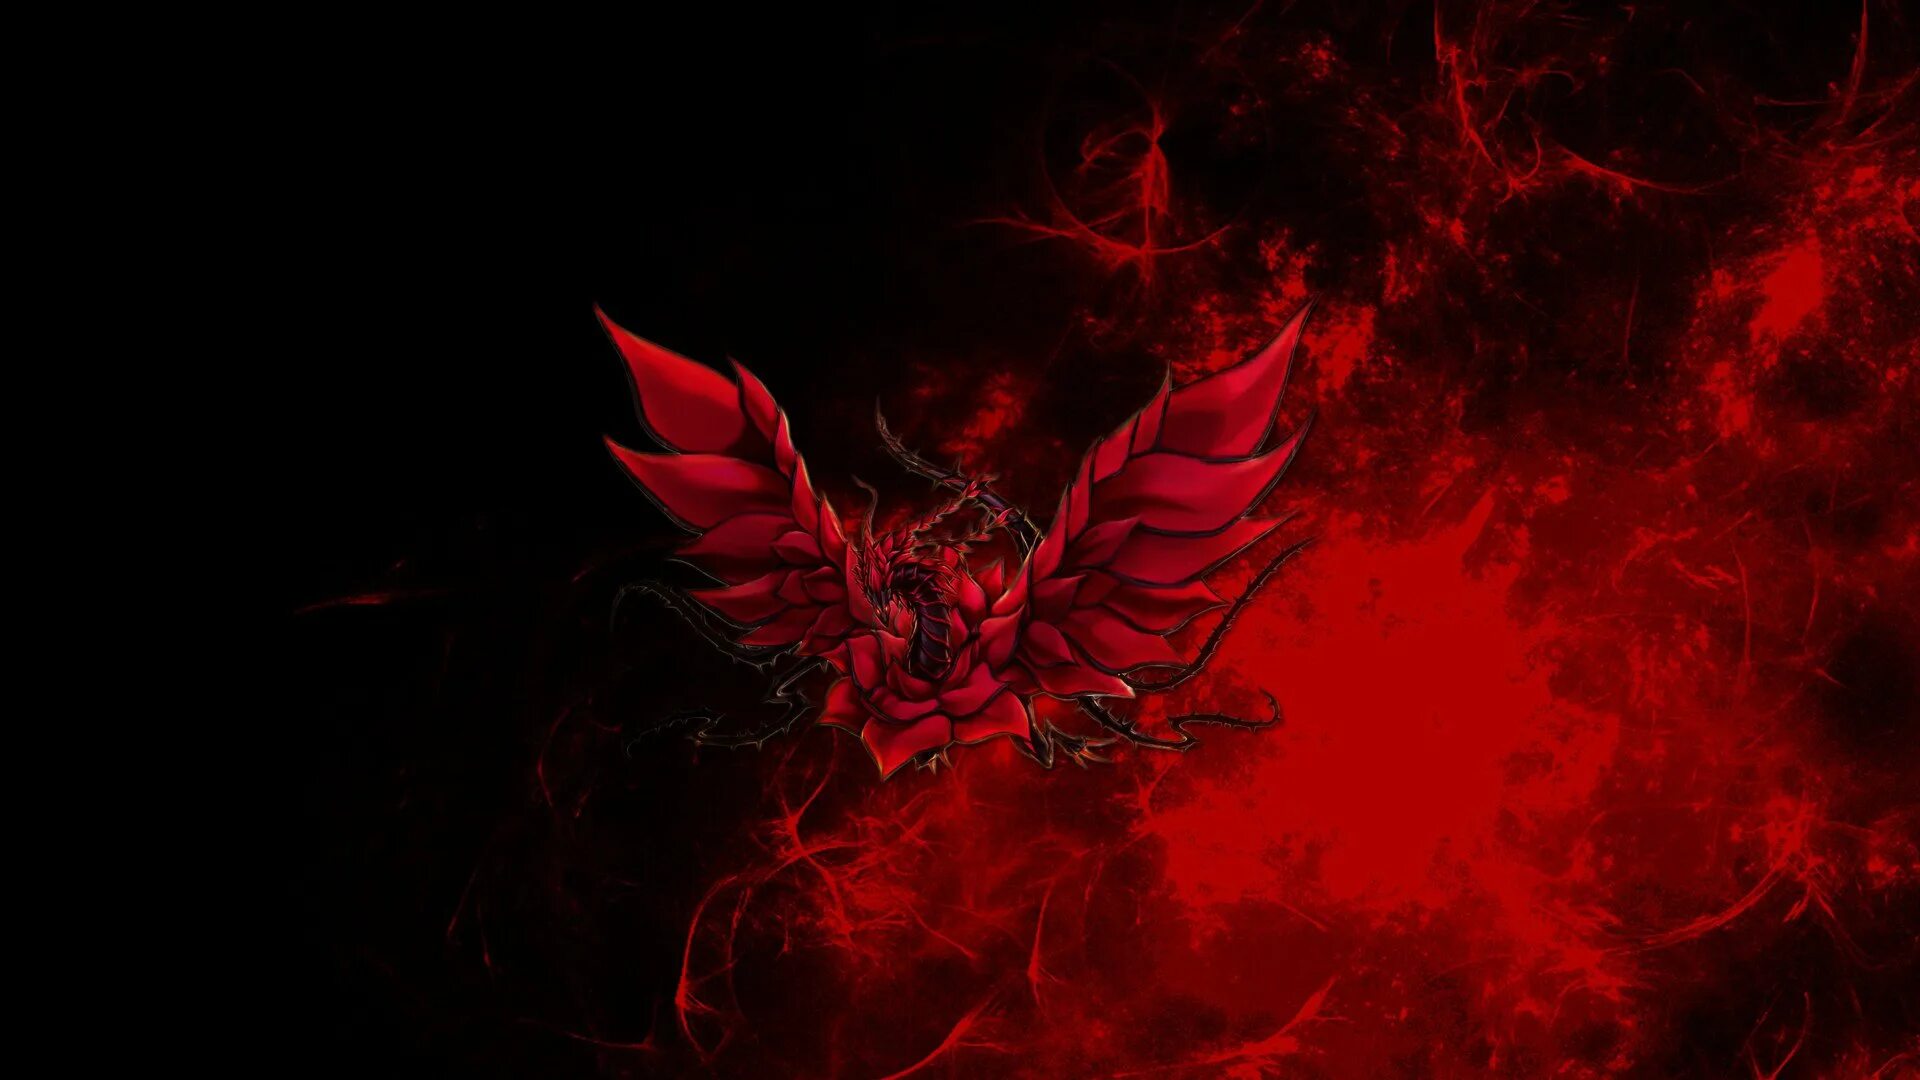 MSI Red Dragon. Ред драгон про Блэк. Ред драгон Draconic. Красный дракон на черном фоне.